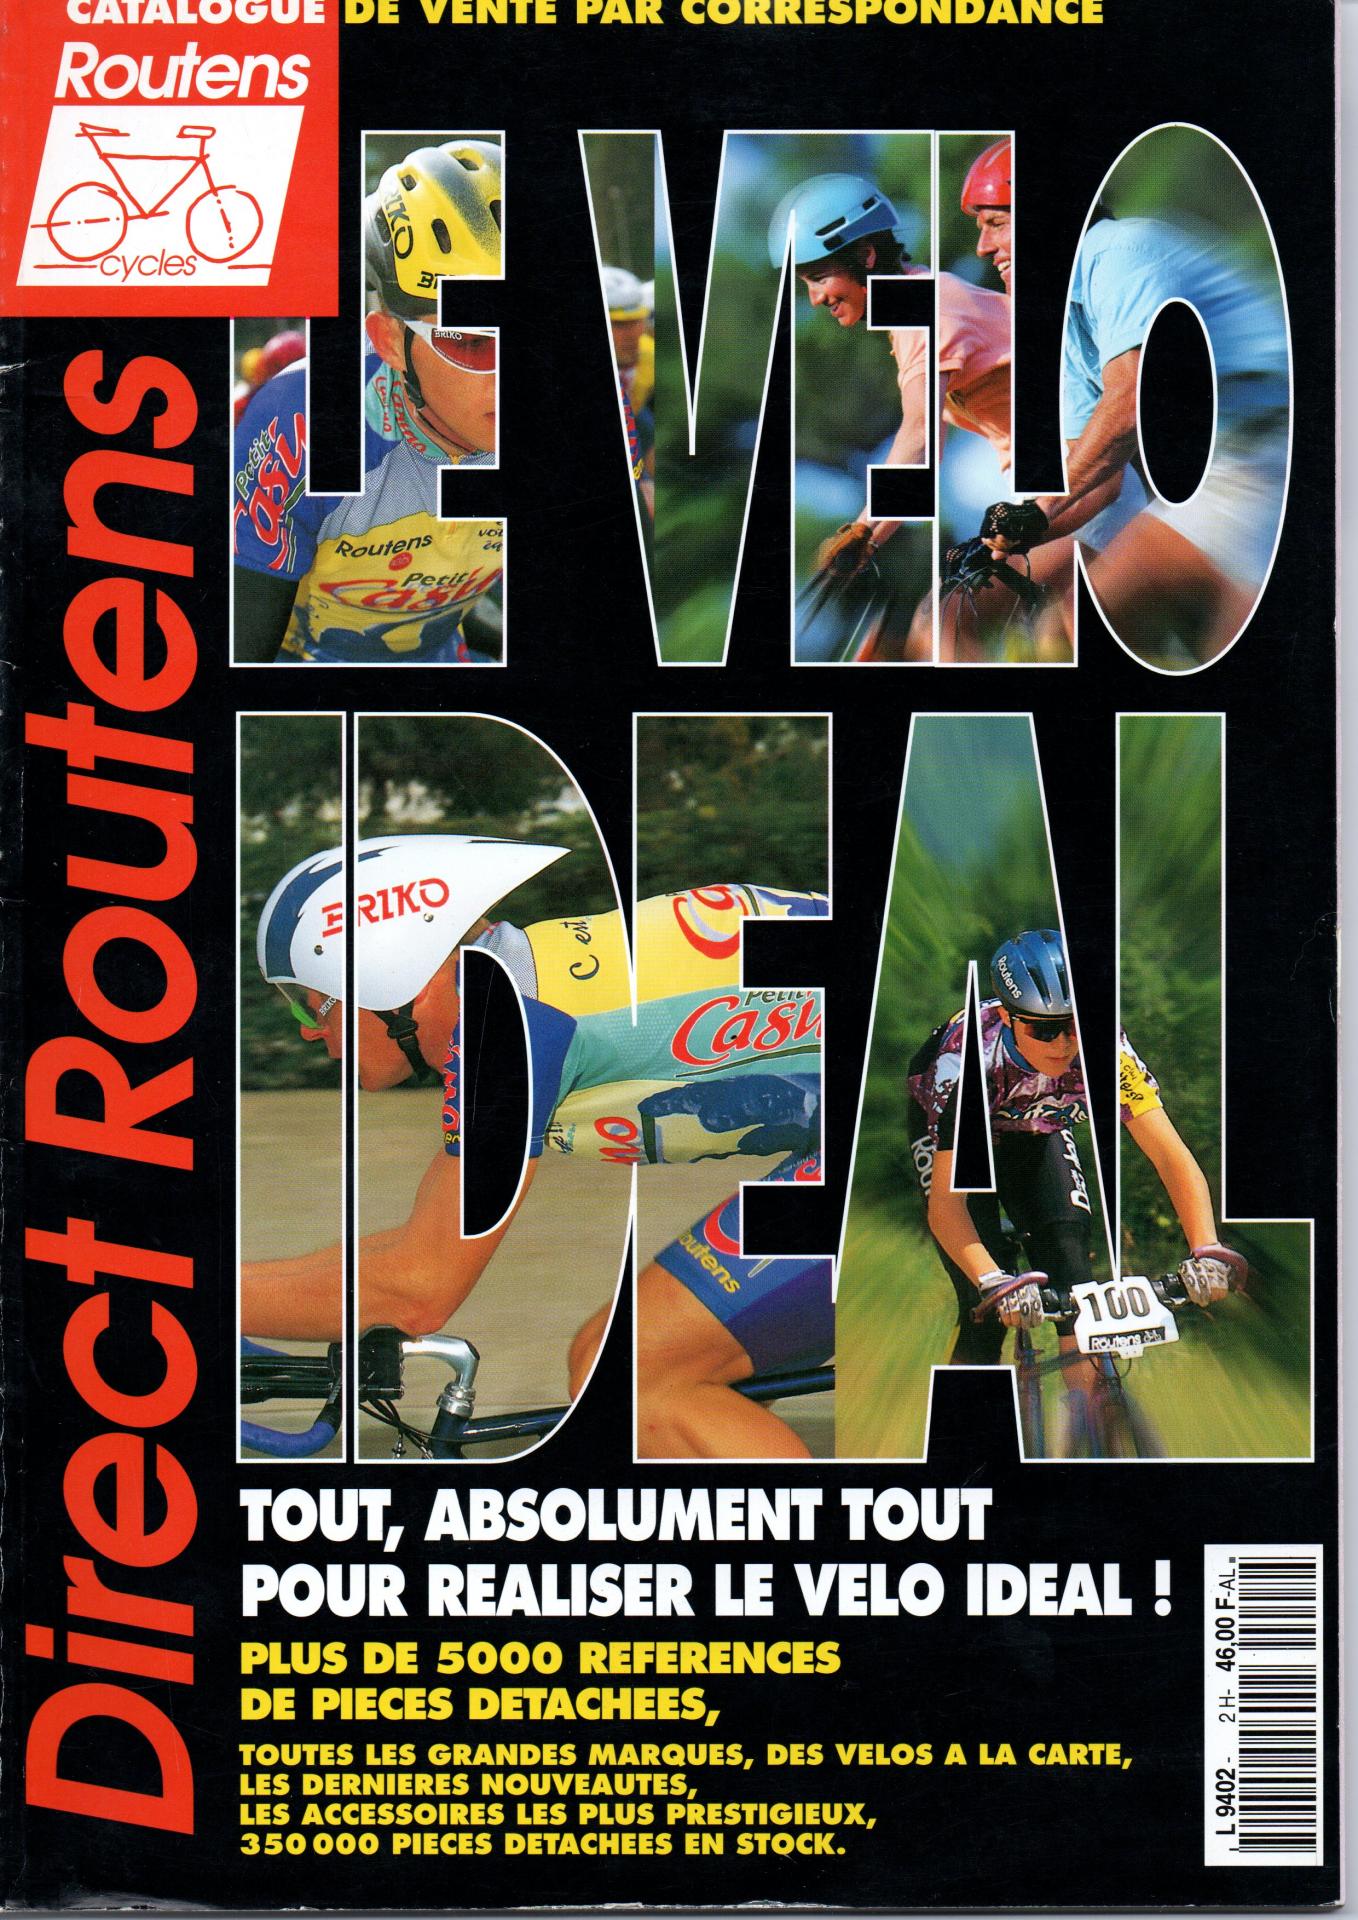 Routens catalogue 1996 1